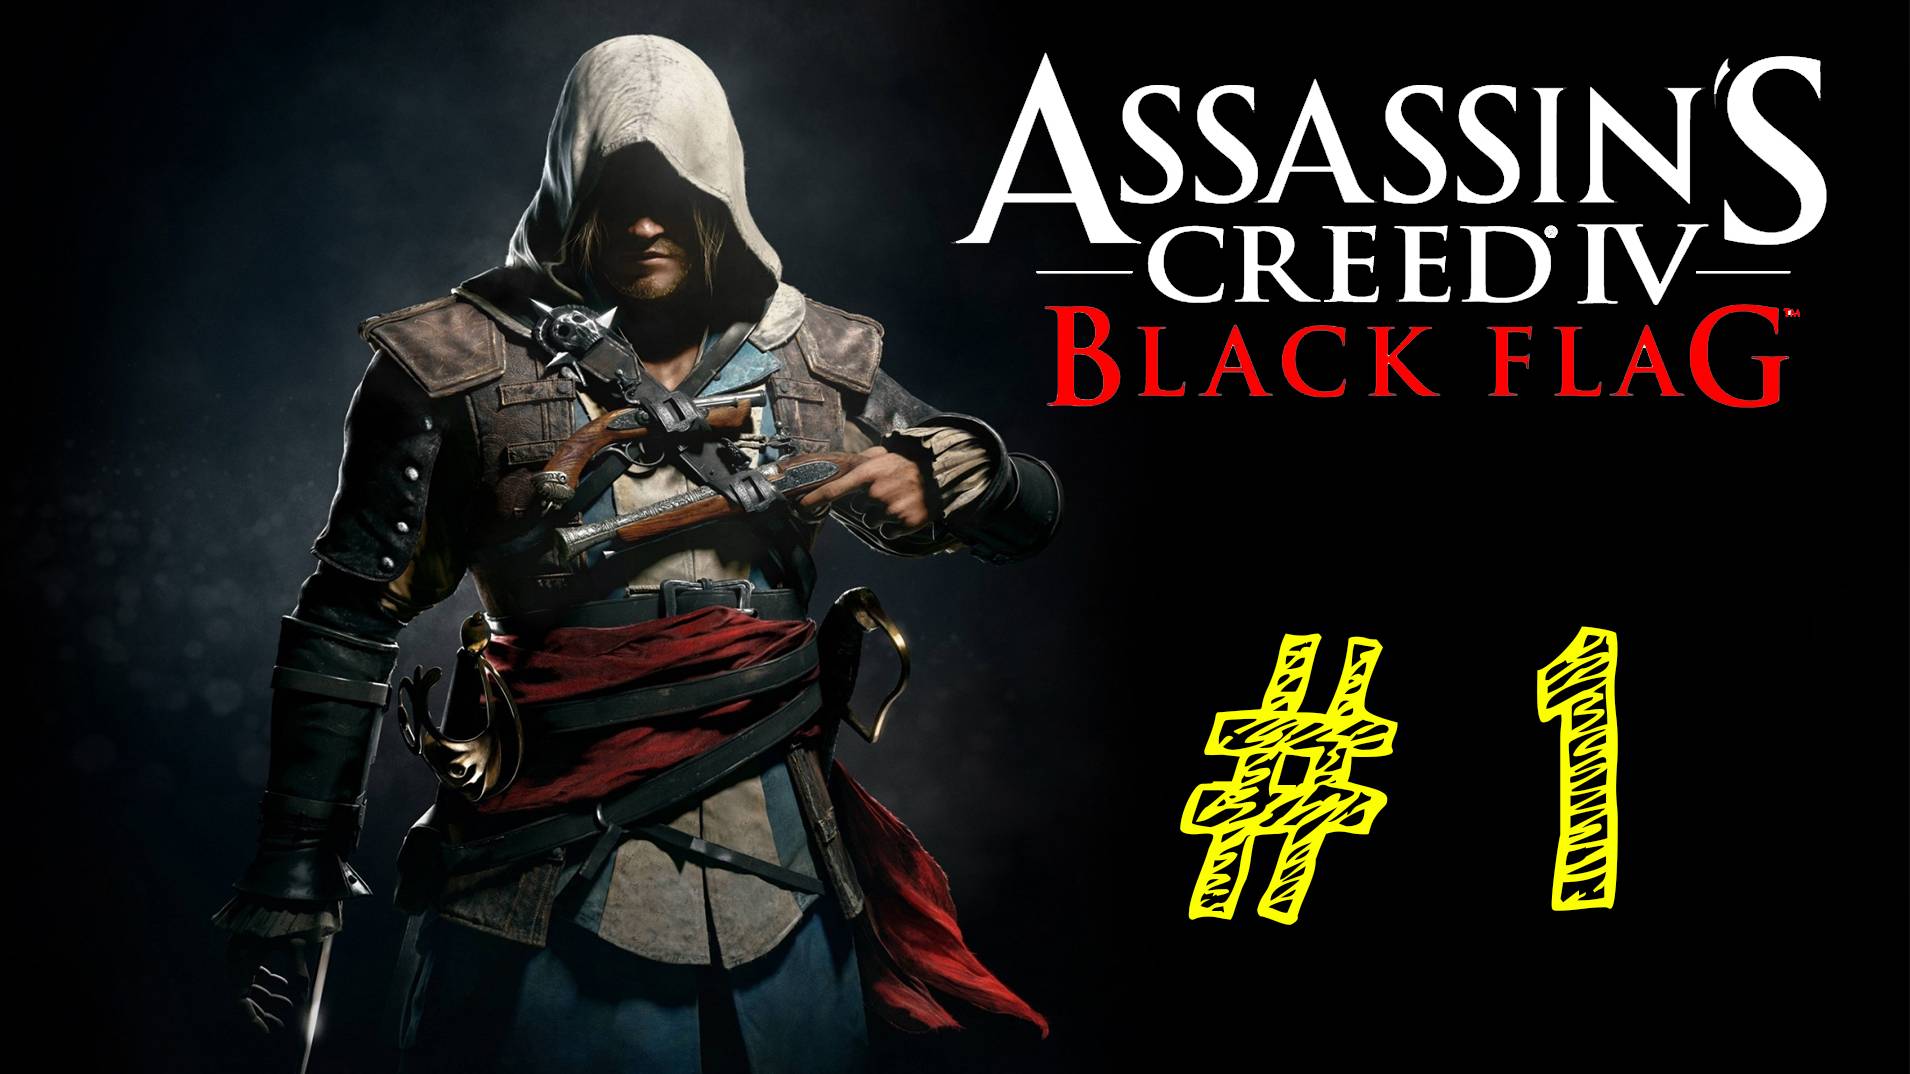 Assassin's Creed IV Black Flag. Начало пути. Знакомство с игрой. Путь пирата. Пиратское приключение